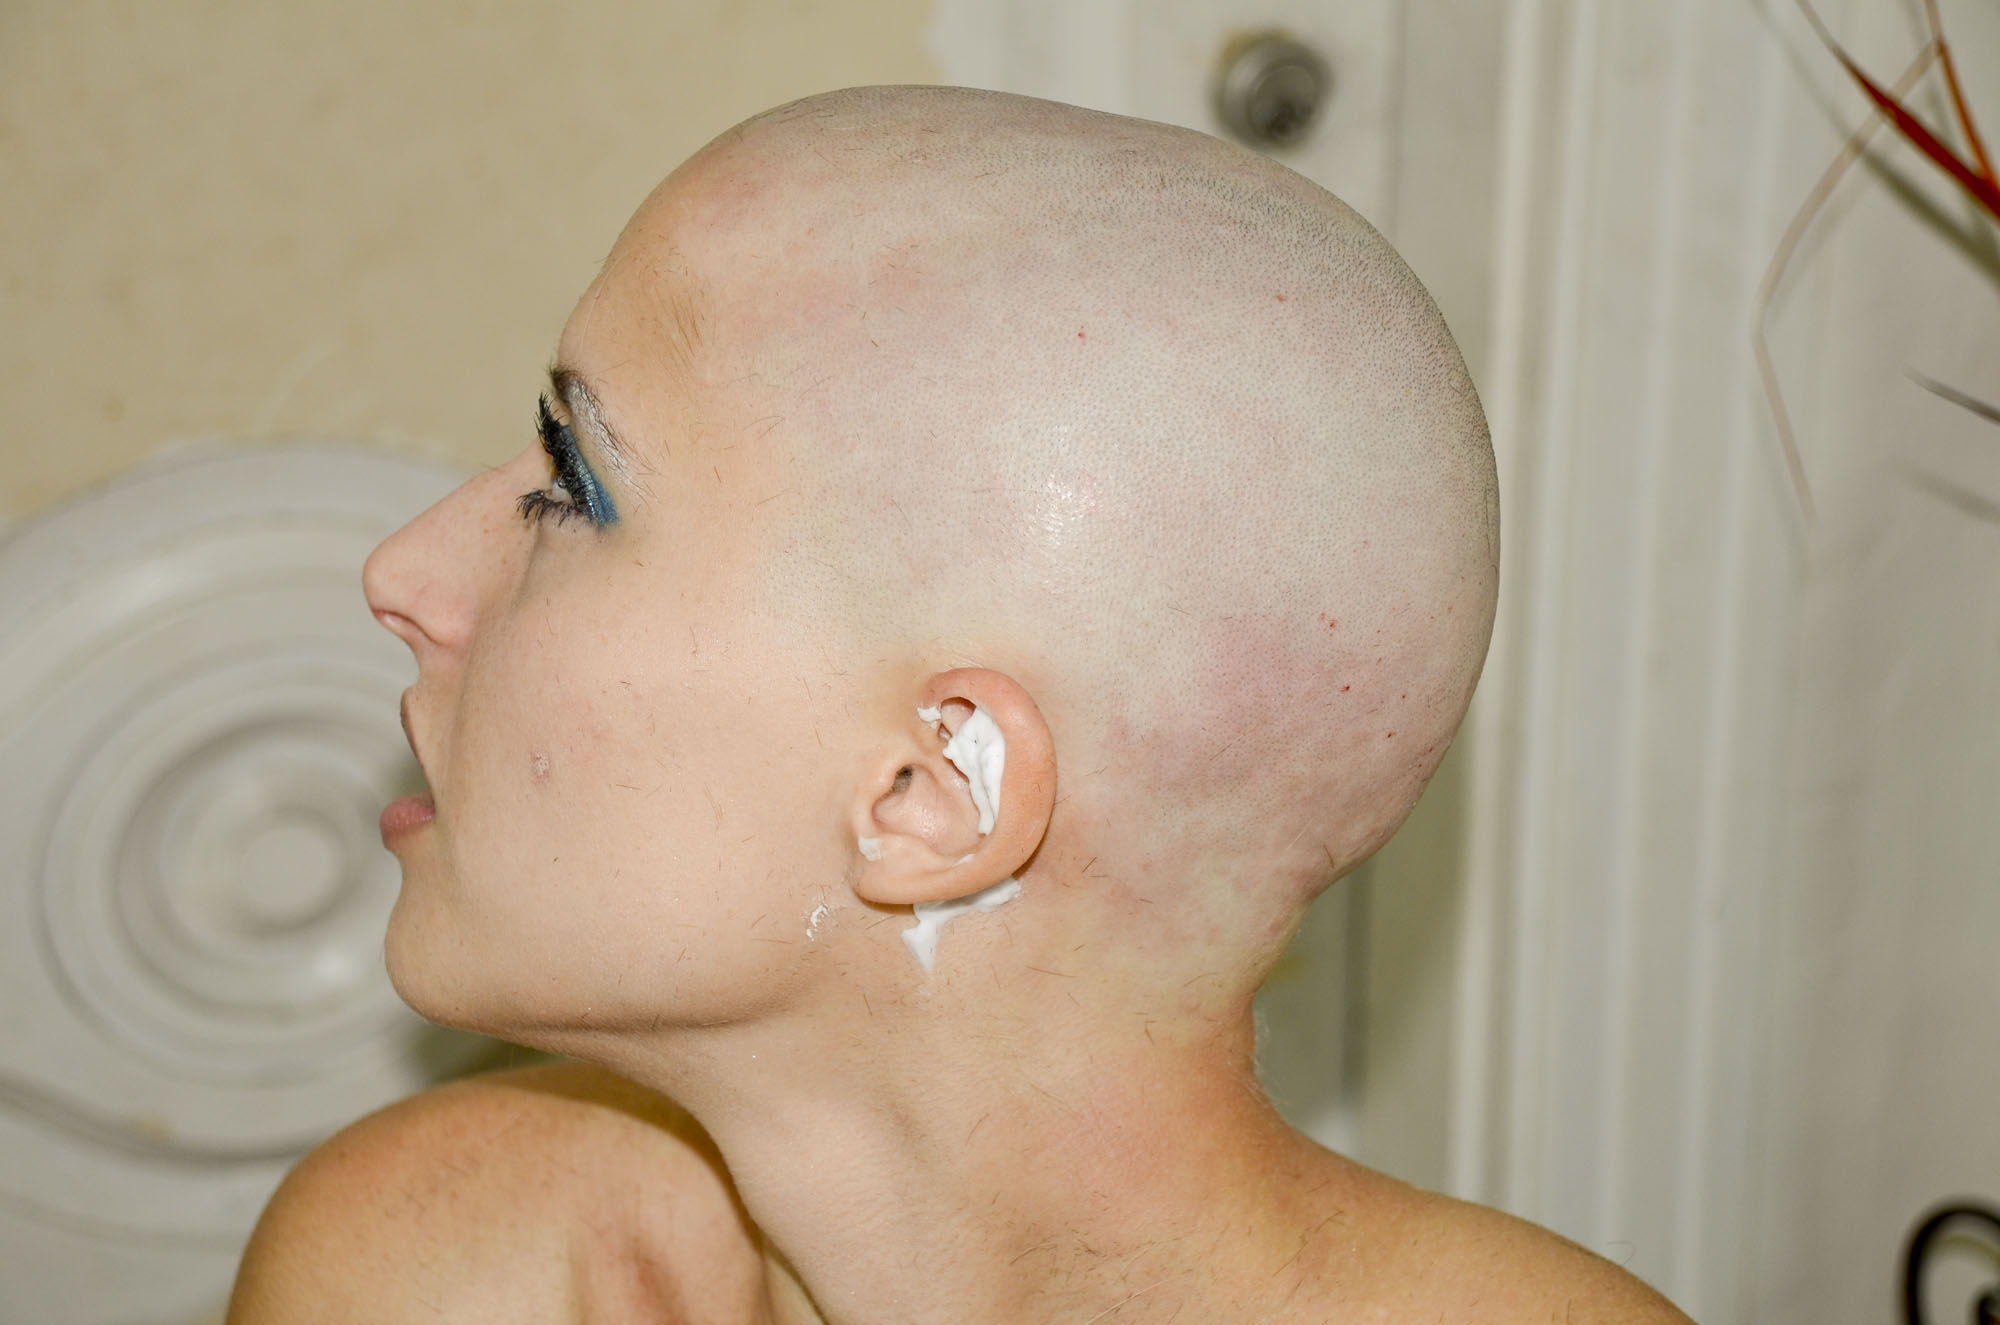 photos woman headed sex bald